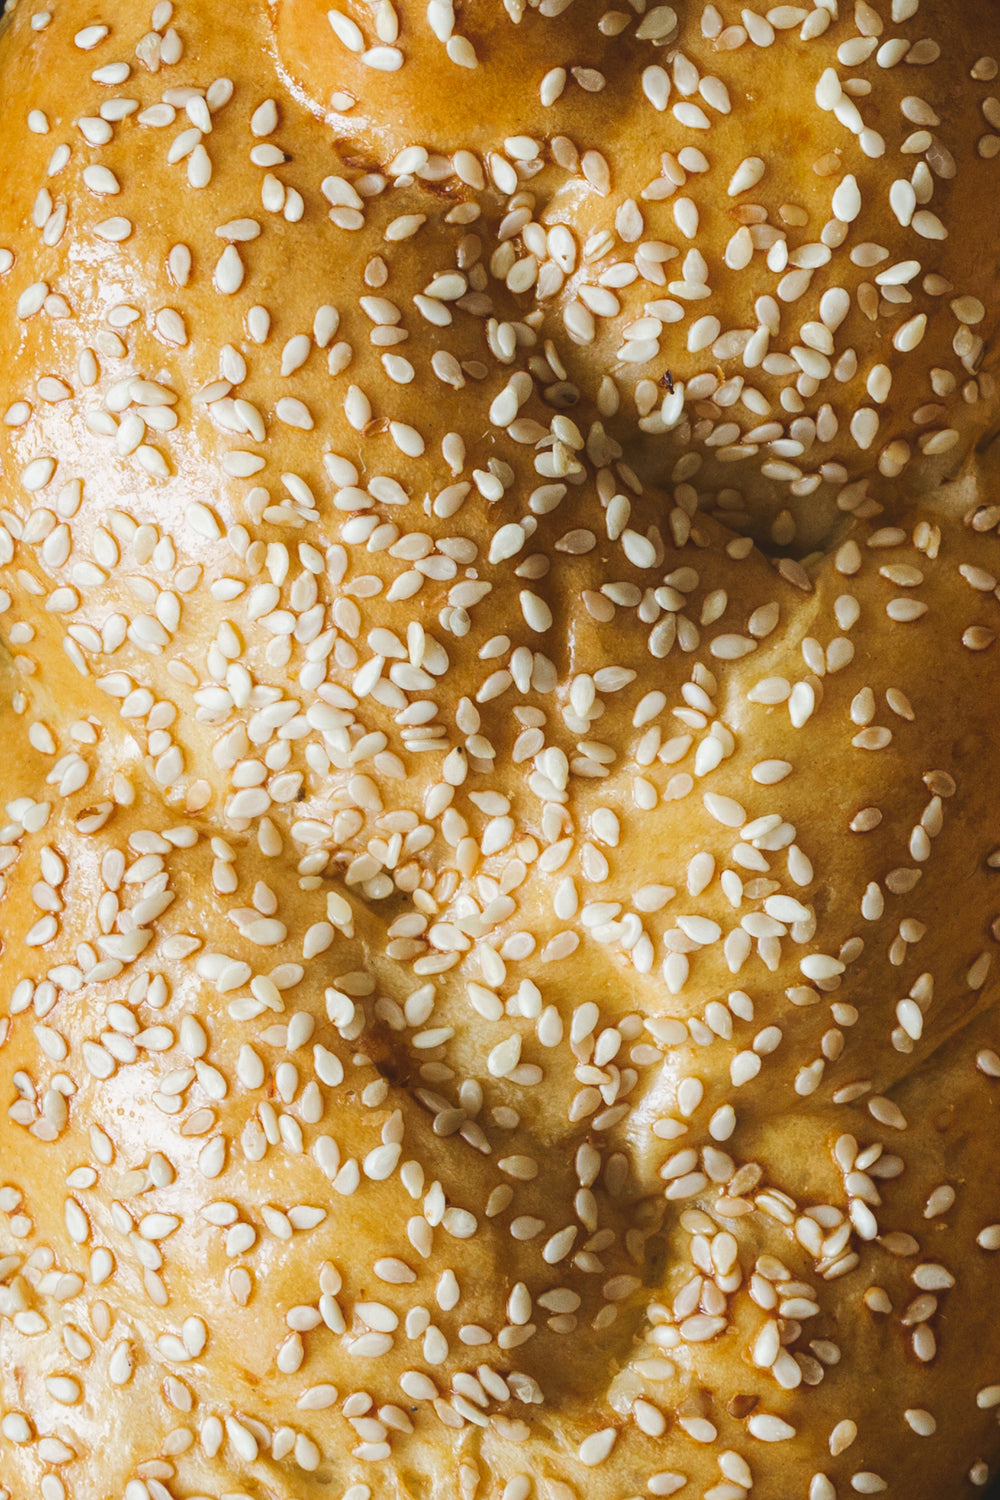 sesame seeds on challah bread texture